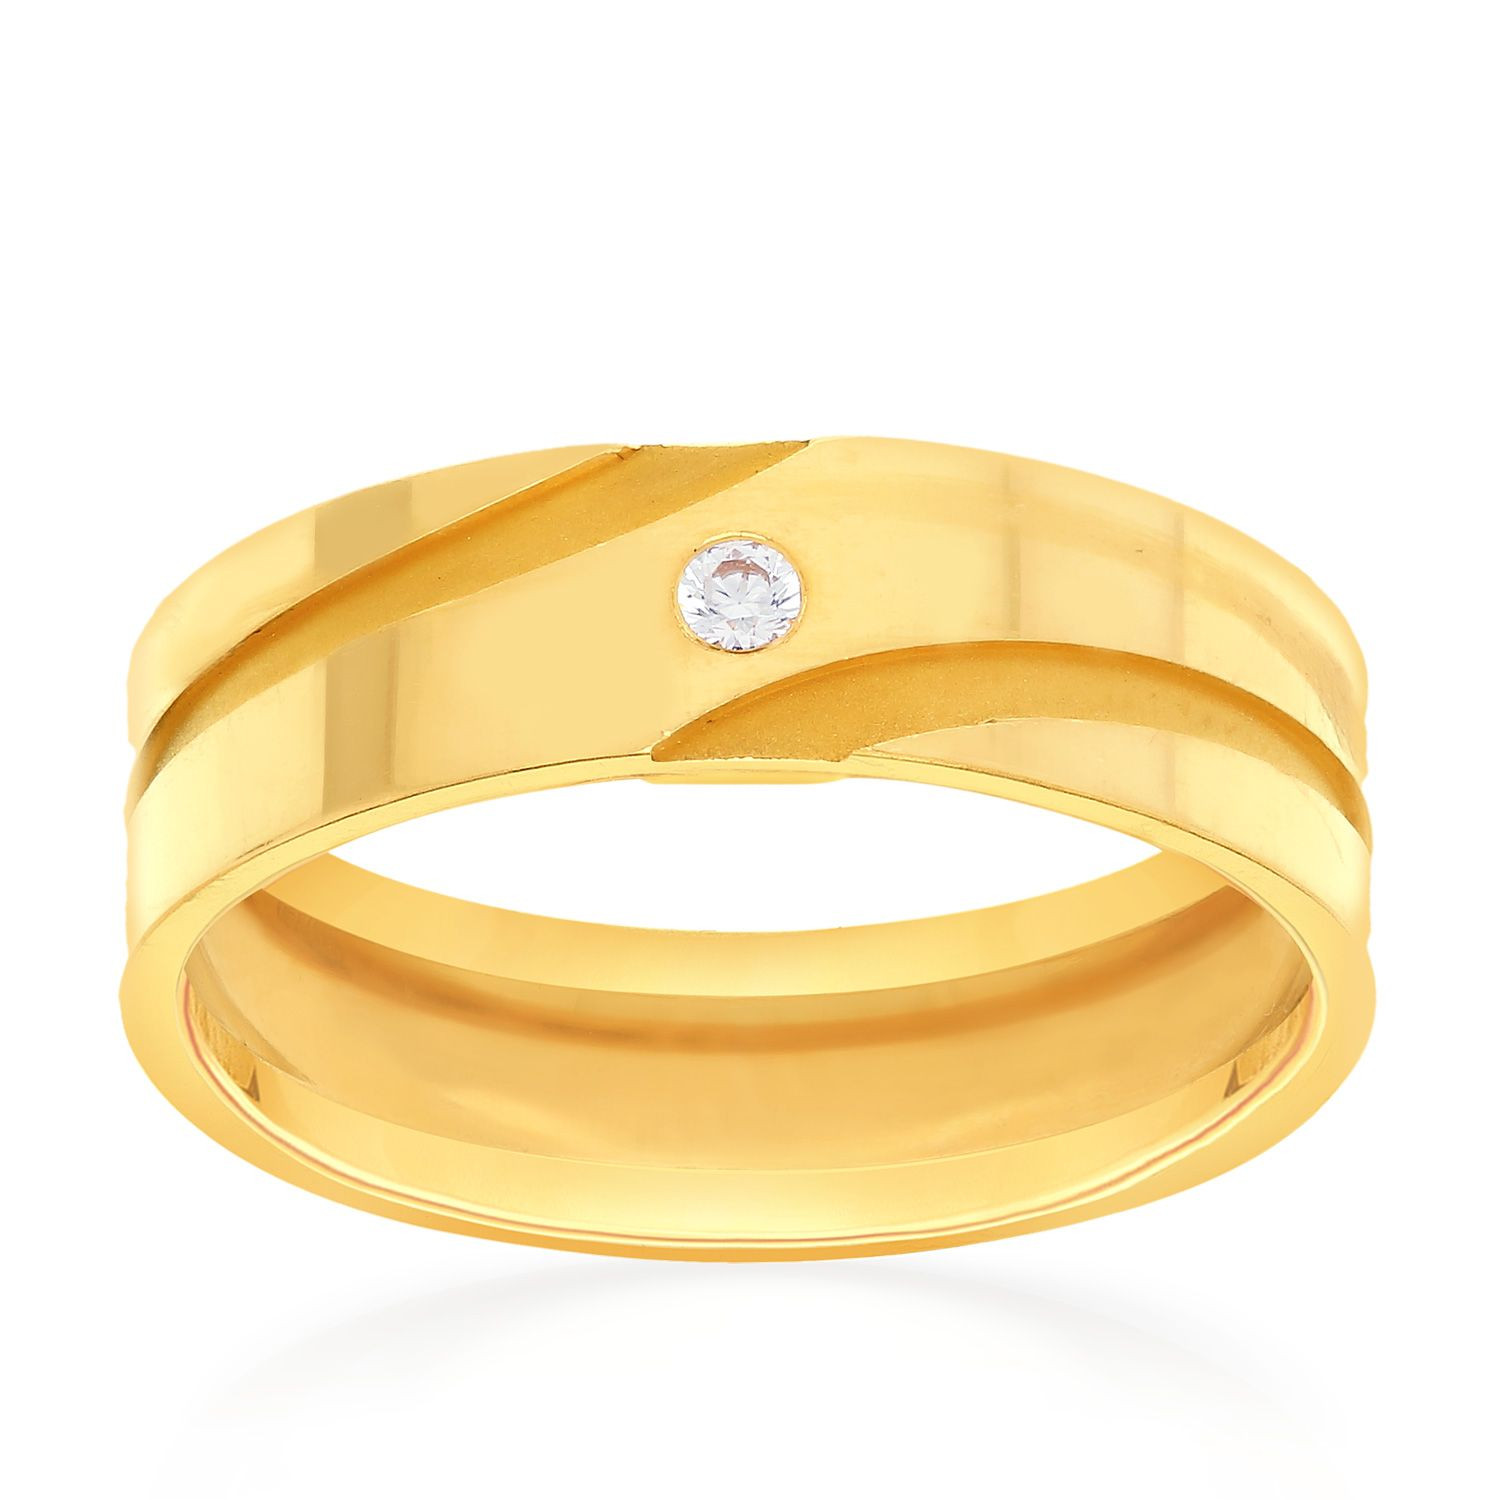 Malabar Gold & Diamonds 22KT Yellow Gold Ring for Men : Amazon.in: Fashion